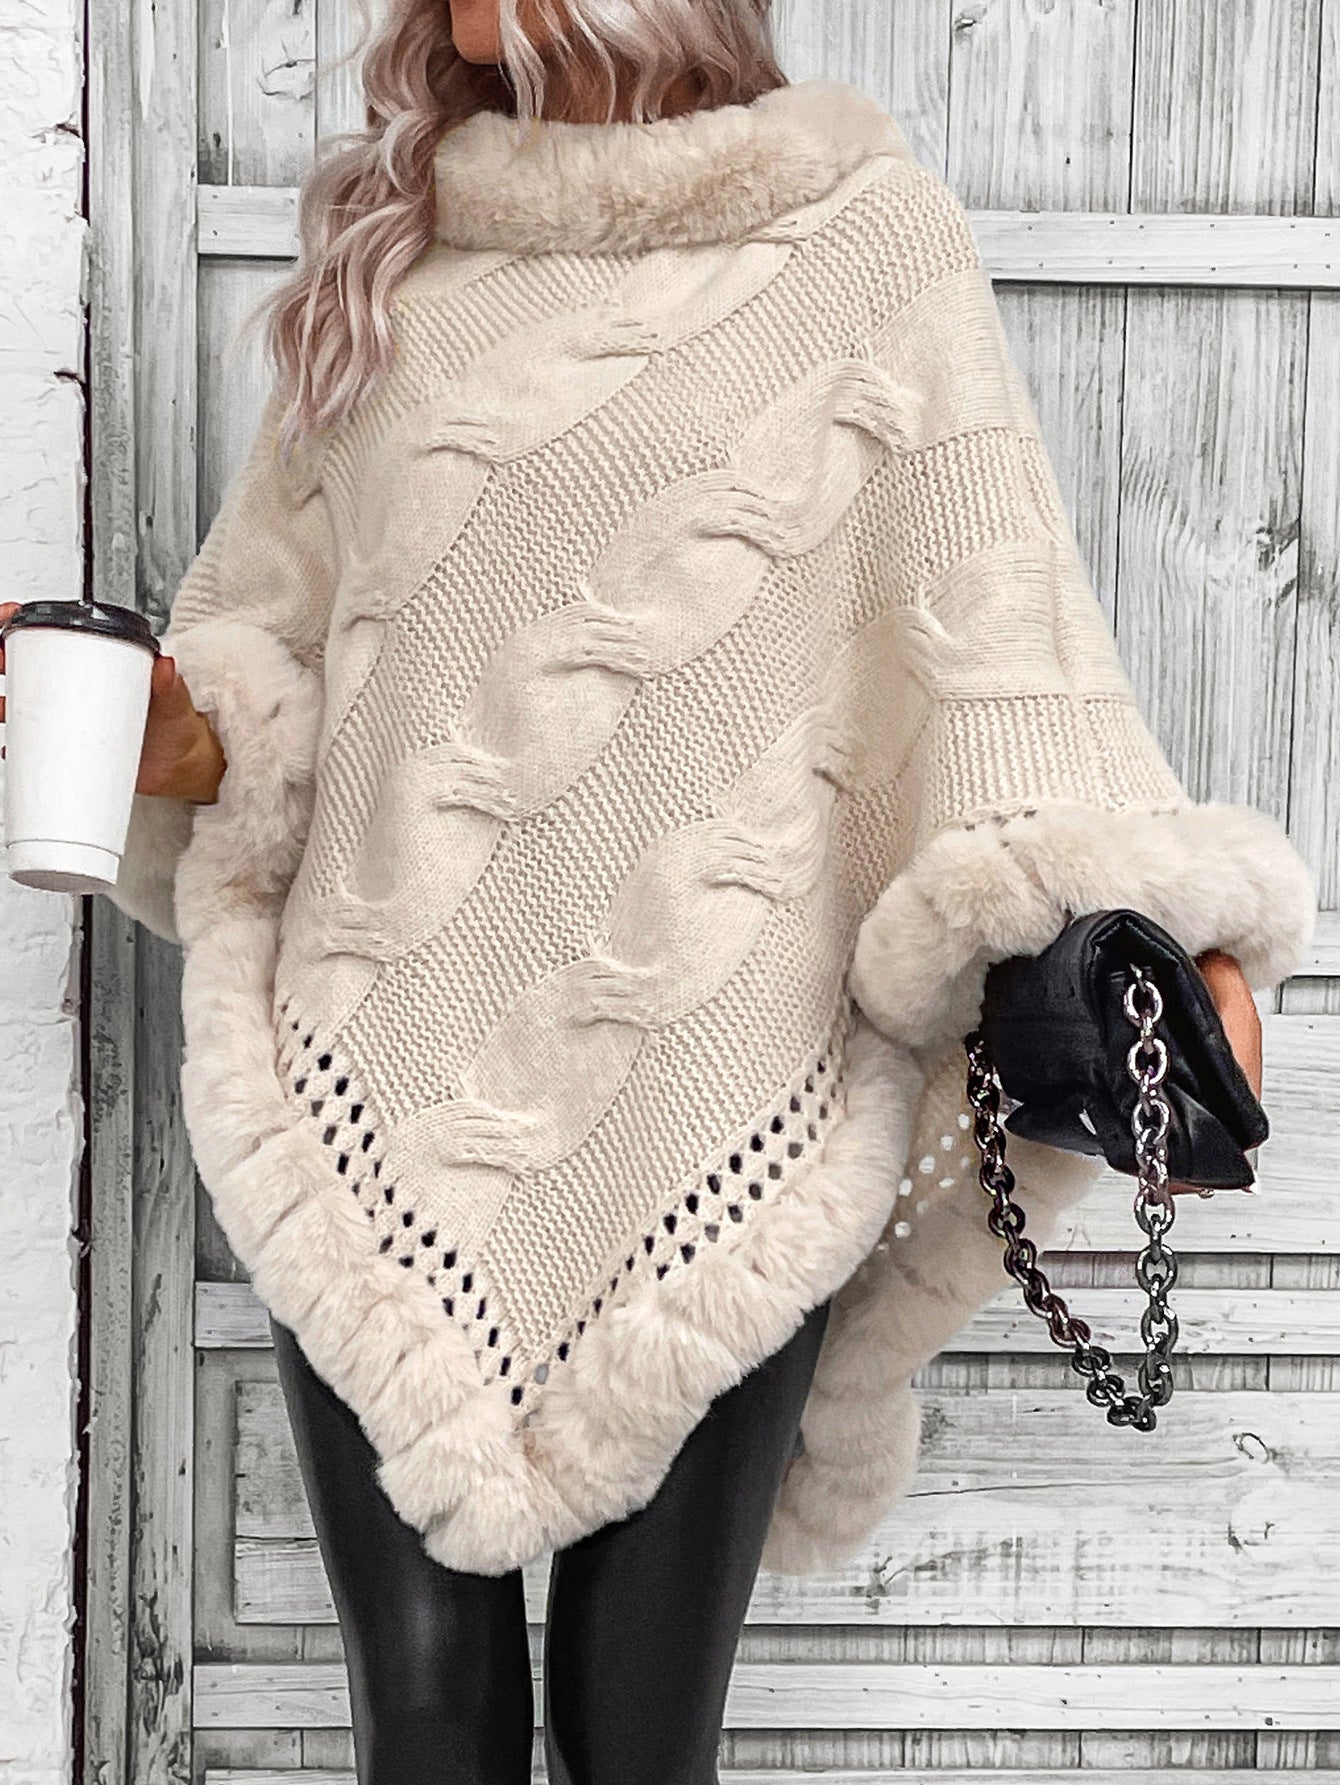 Fur Collar Hemp Pattern Cardigan Cape Sweater for Stylish Women